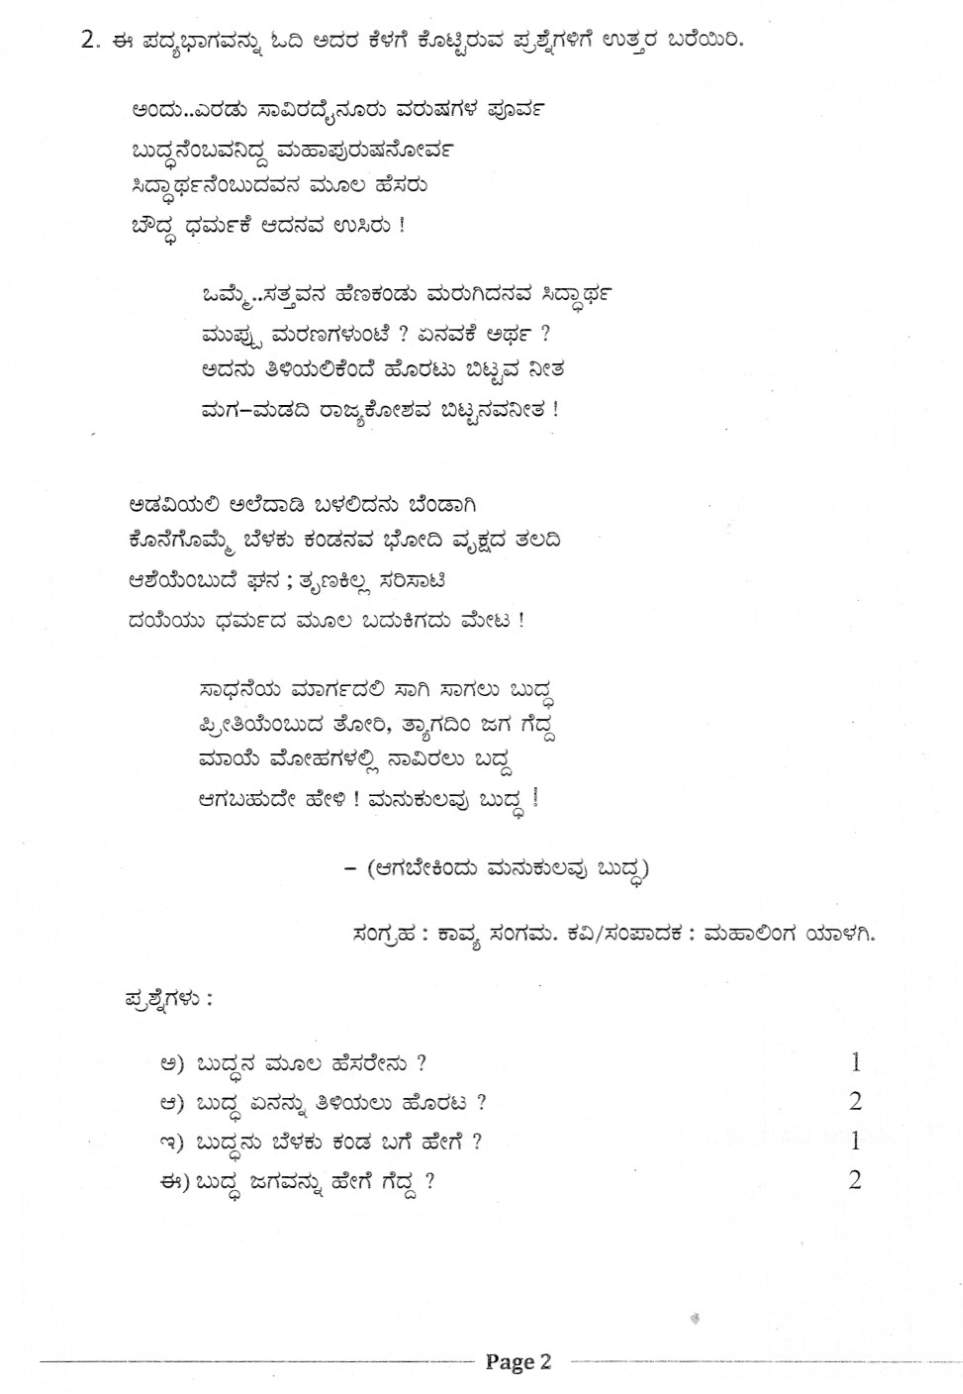 Official Letter Writing In Kannada Letter